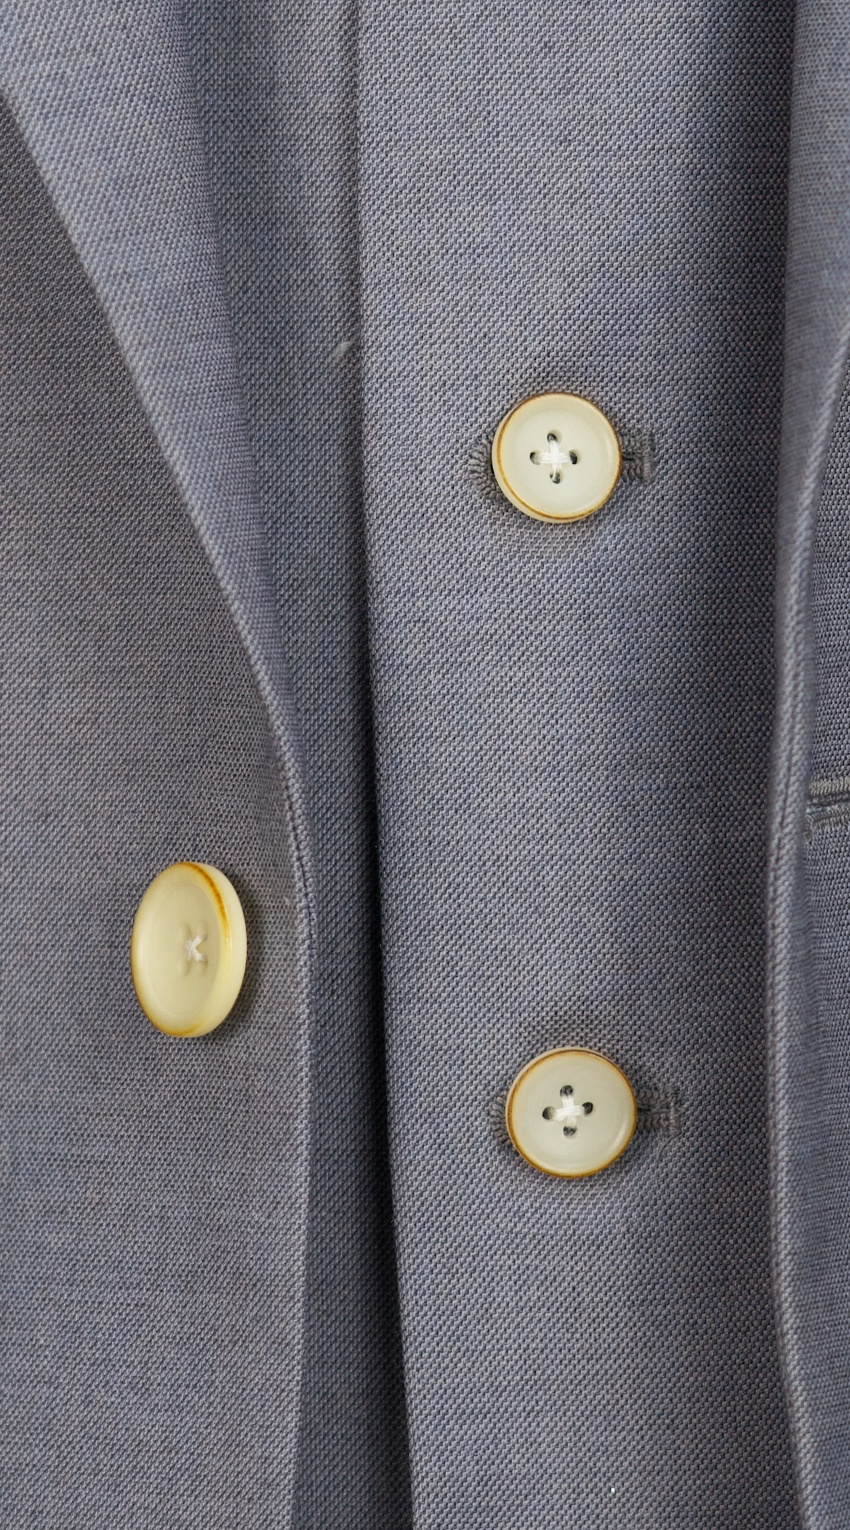 Blue Gray Wool Suit